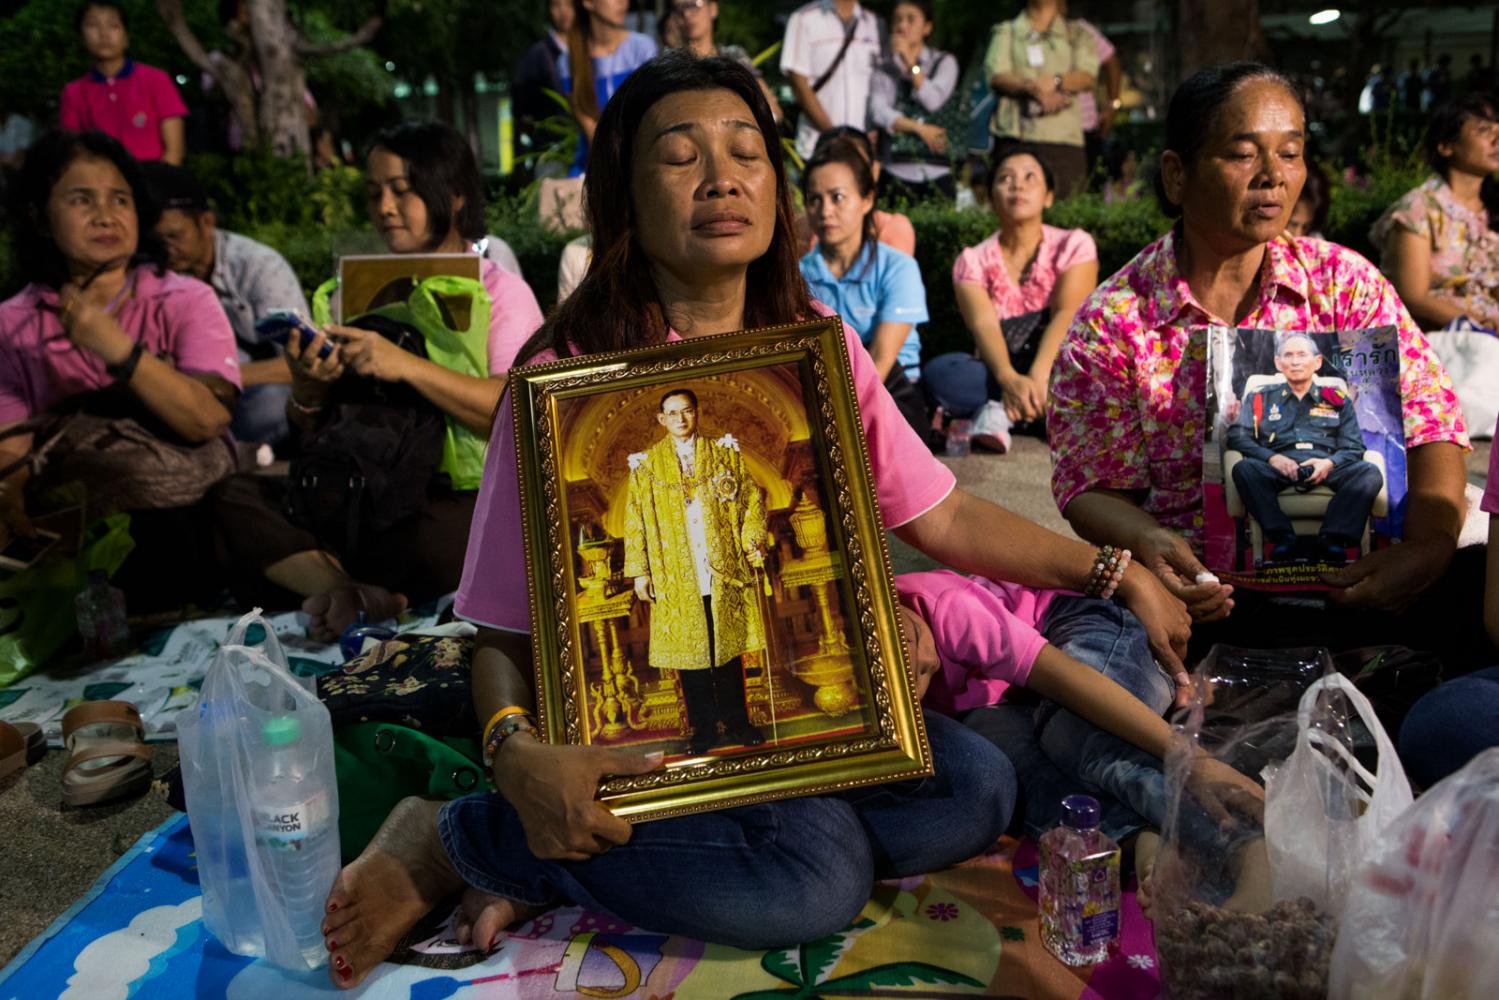 Singles - Mourning Thailand's King Bhumibol Adulyadej